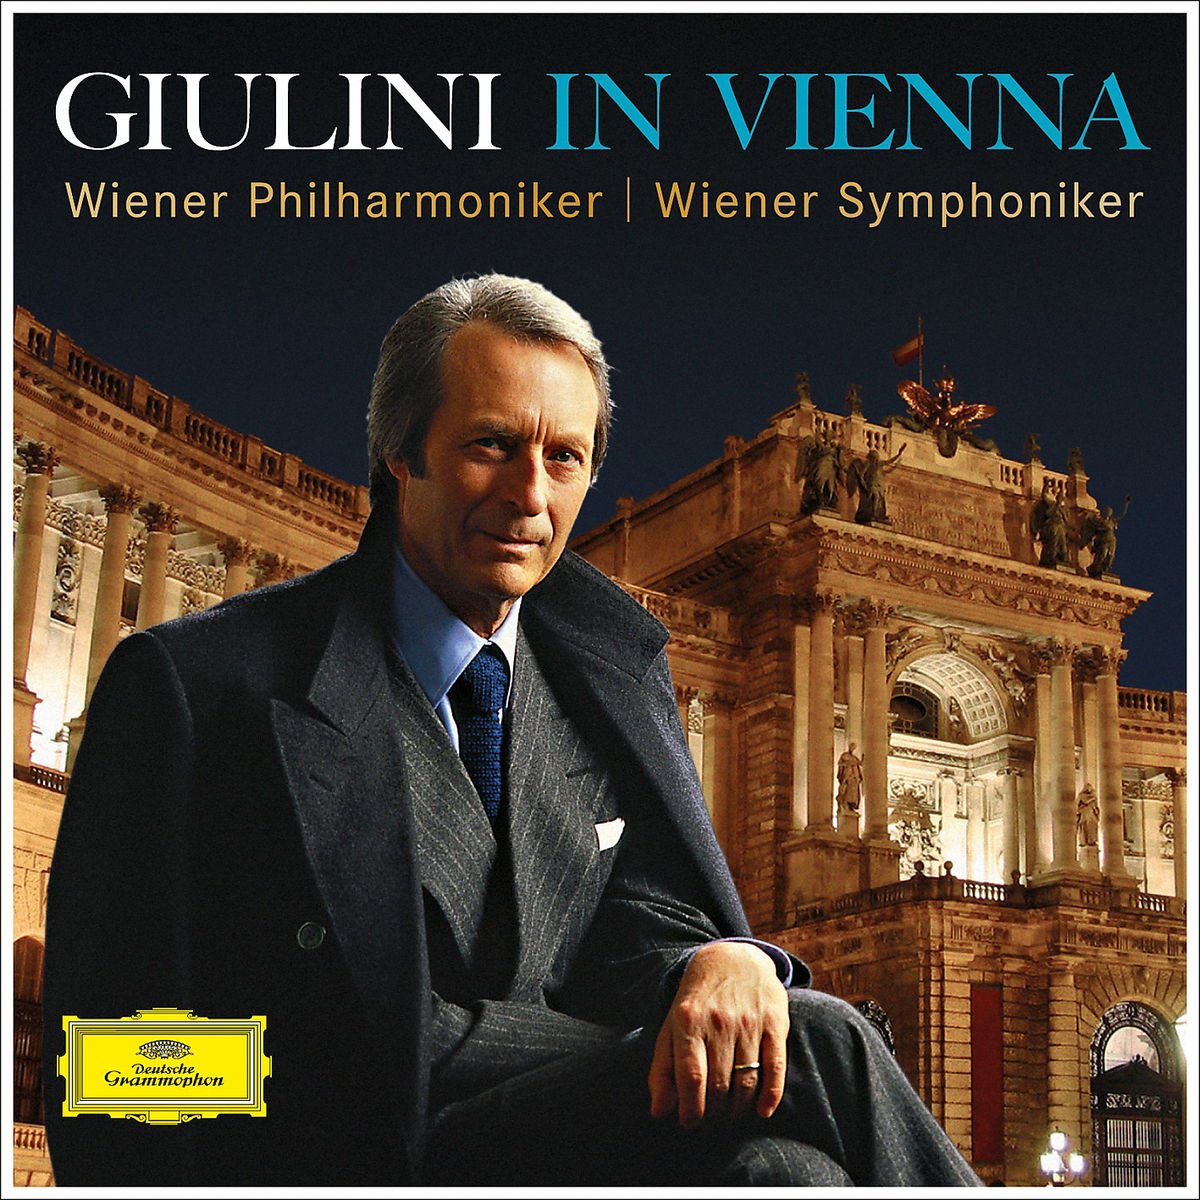 GIULINI IN VIENNA - VIENNA PHILHARMONIC (15 CDS)